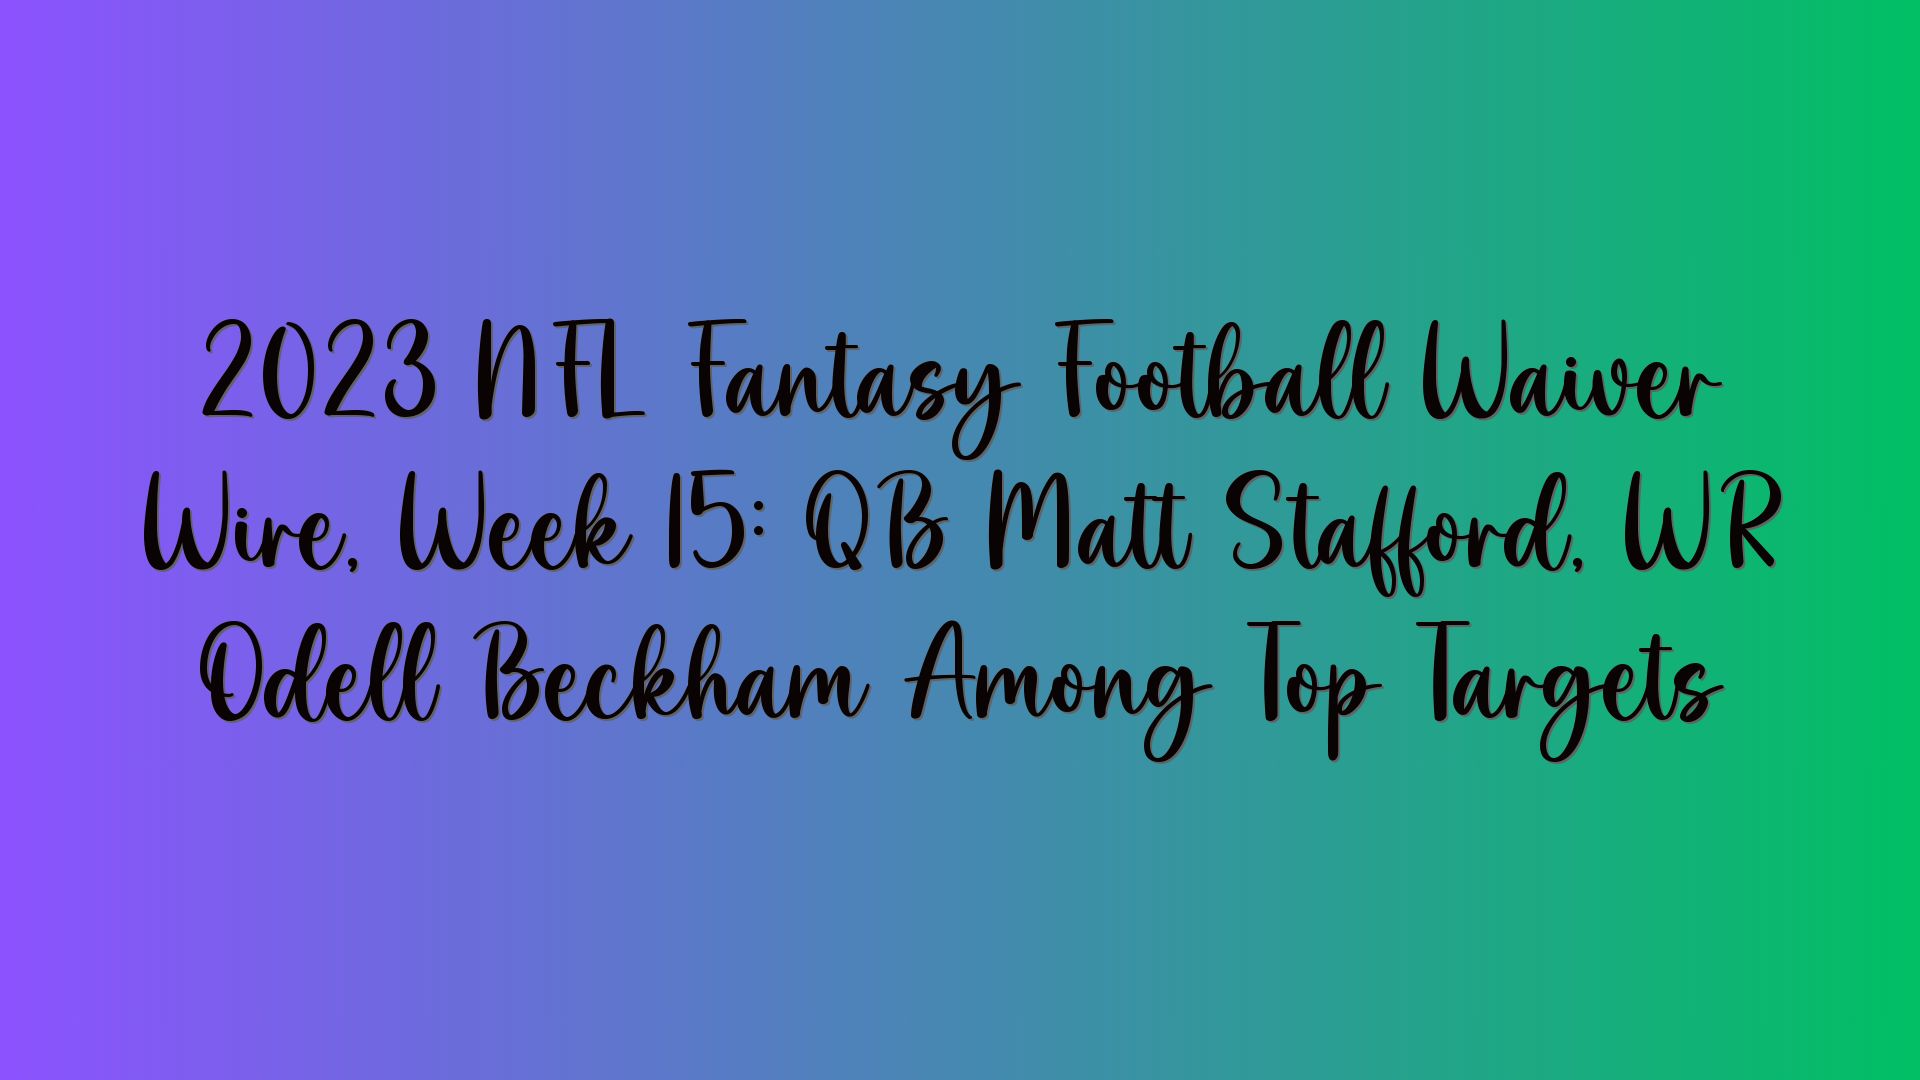 2023 NFL Fantasy Football Waiver Wire, Week 15: QB Matt Stafford, WR Odell Beckham Among Top Targets